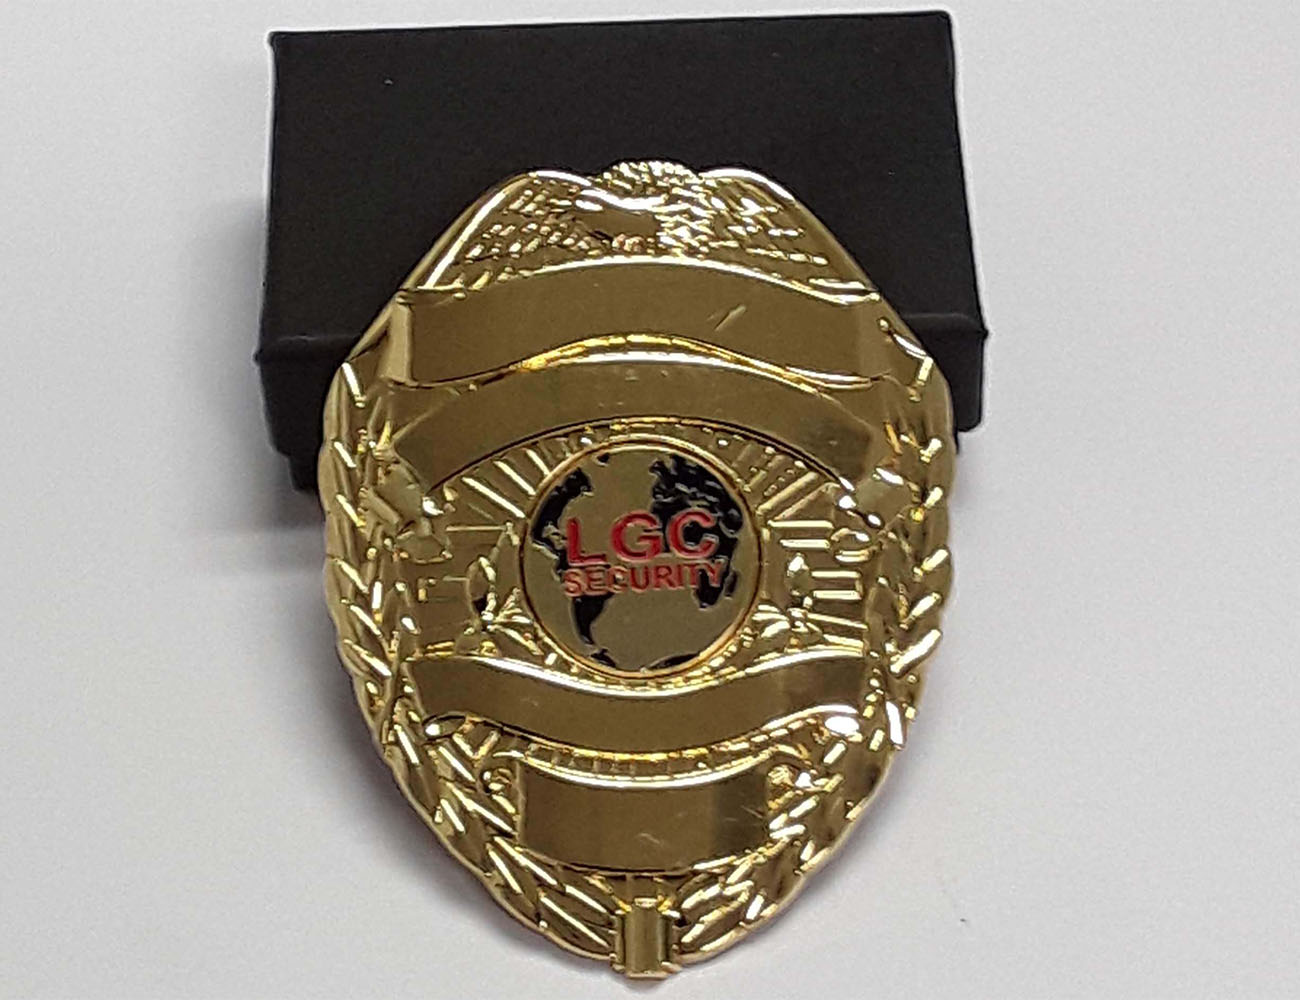 Firefighter Badges